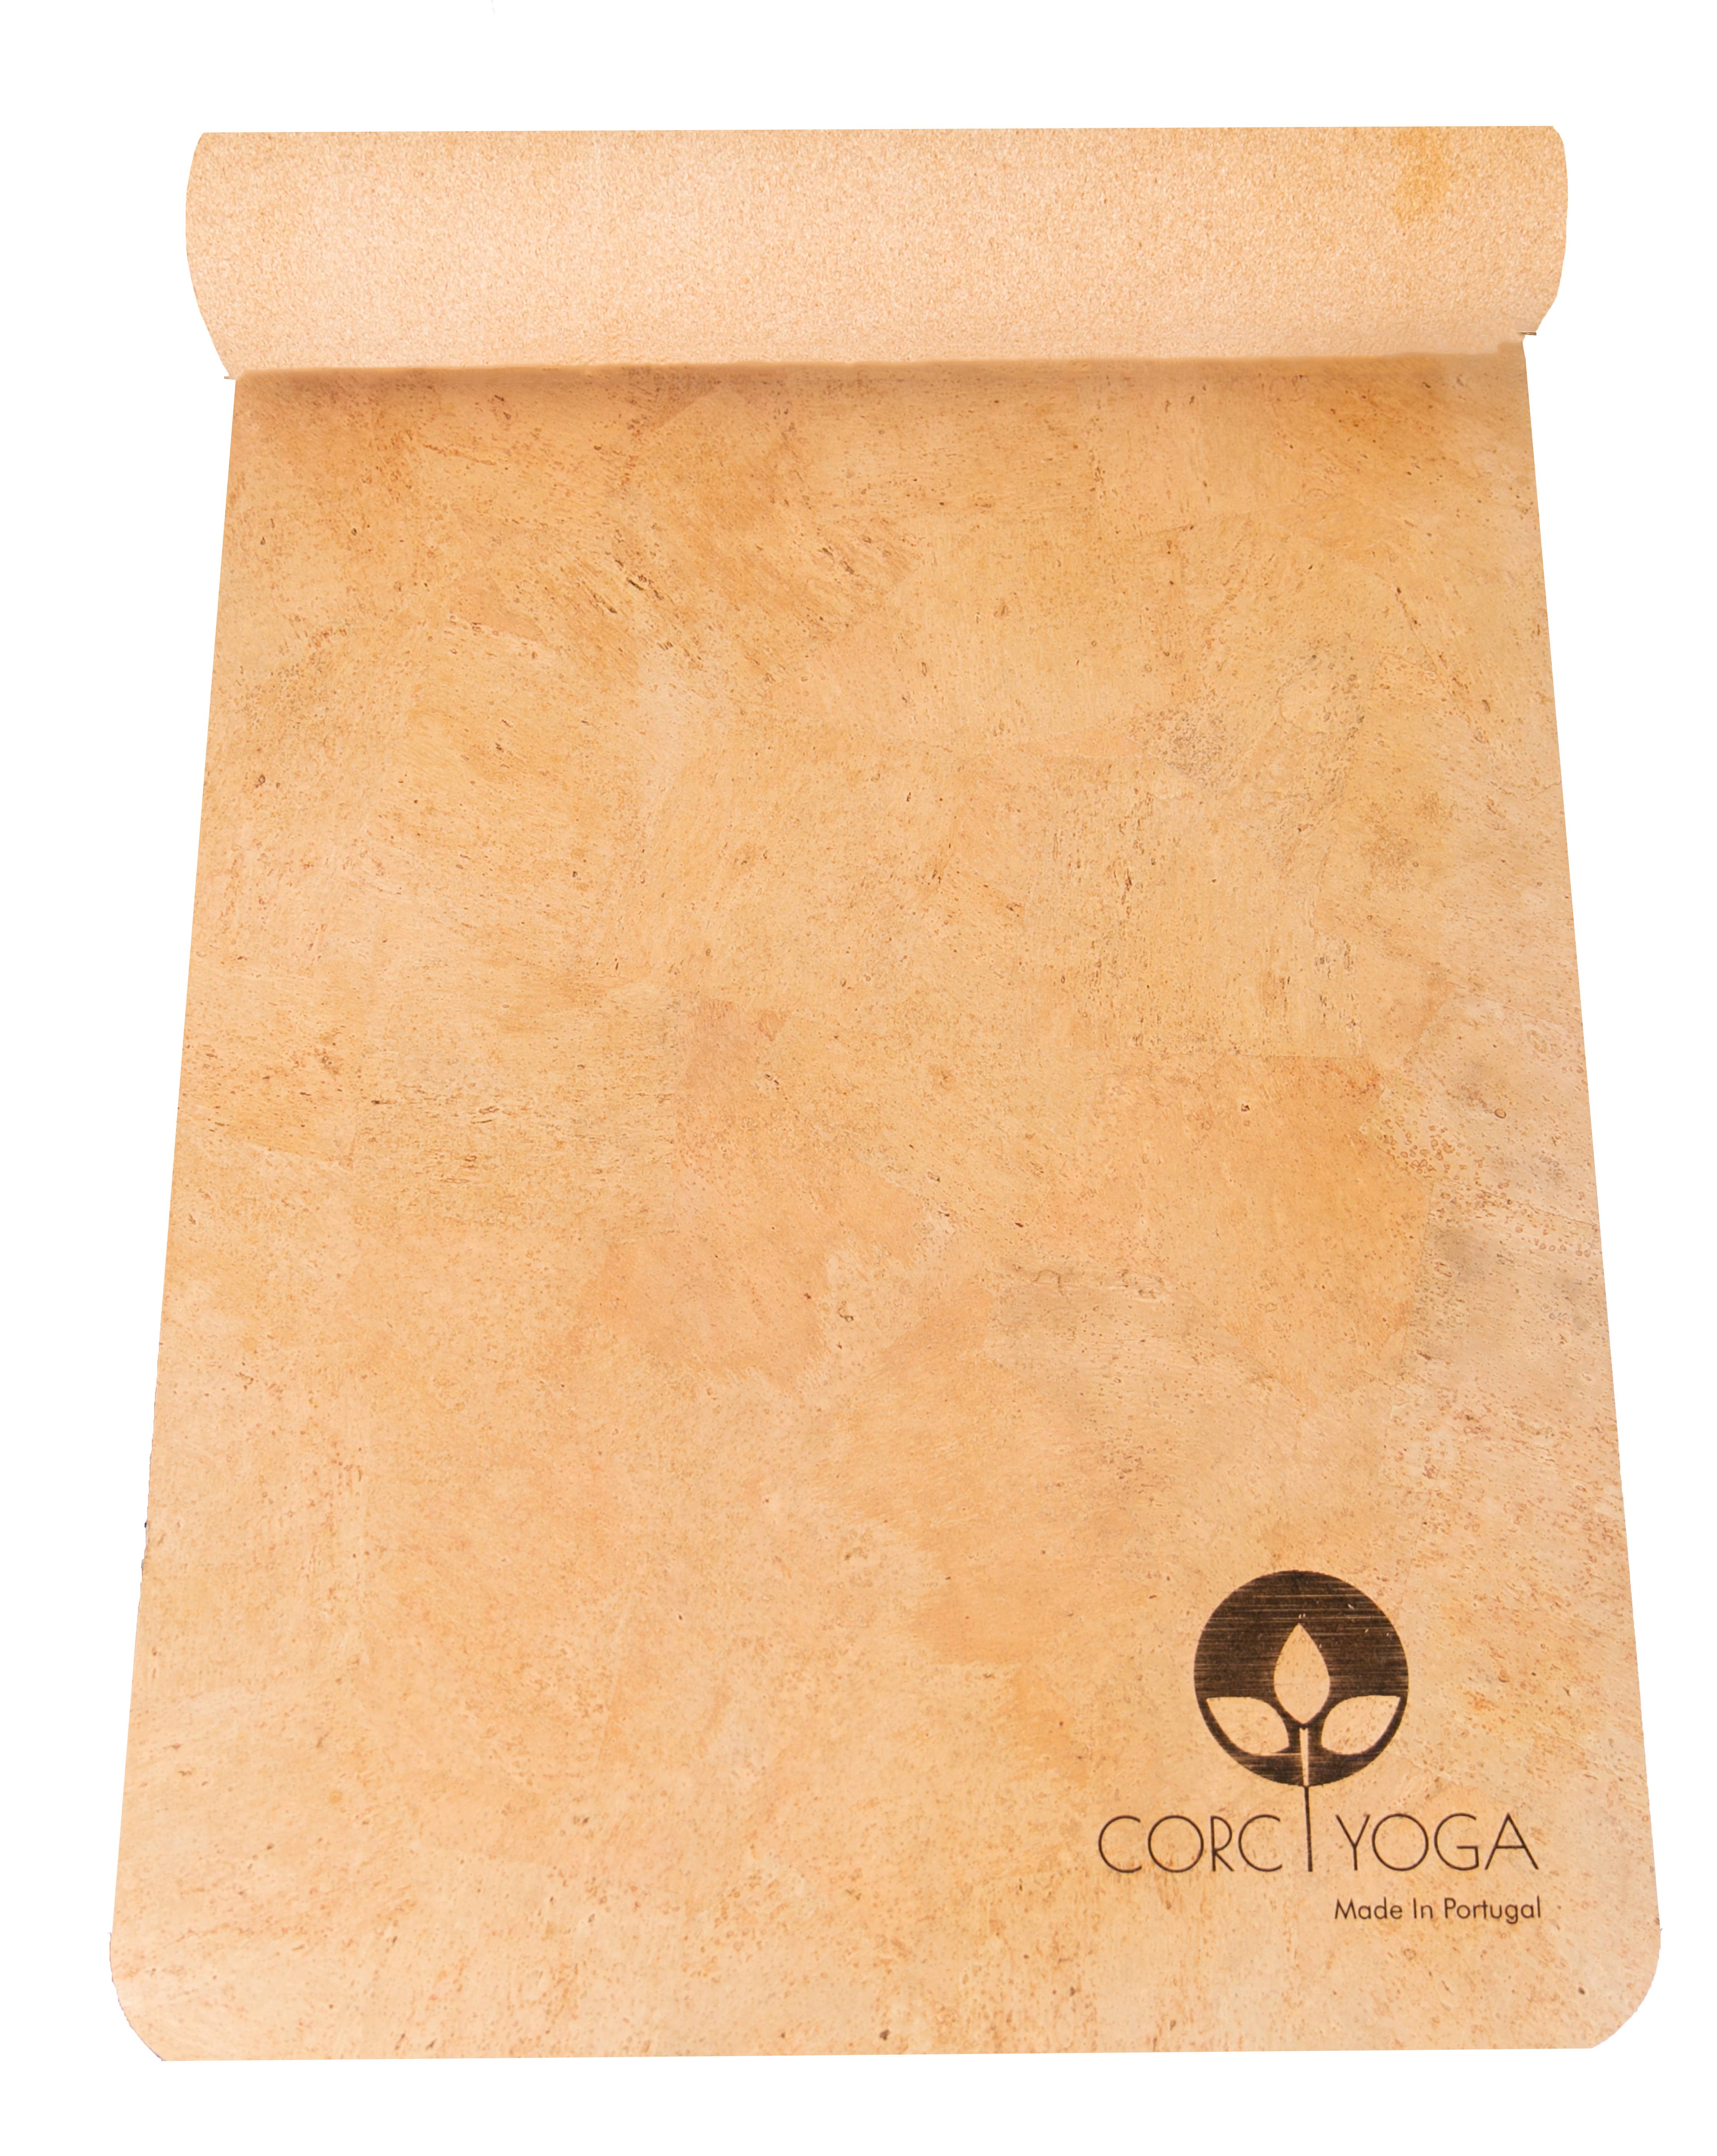 Transfer : Cork Yoga Backpack - Corc Yoga